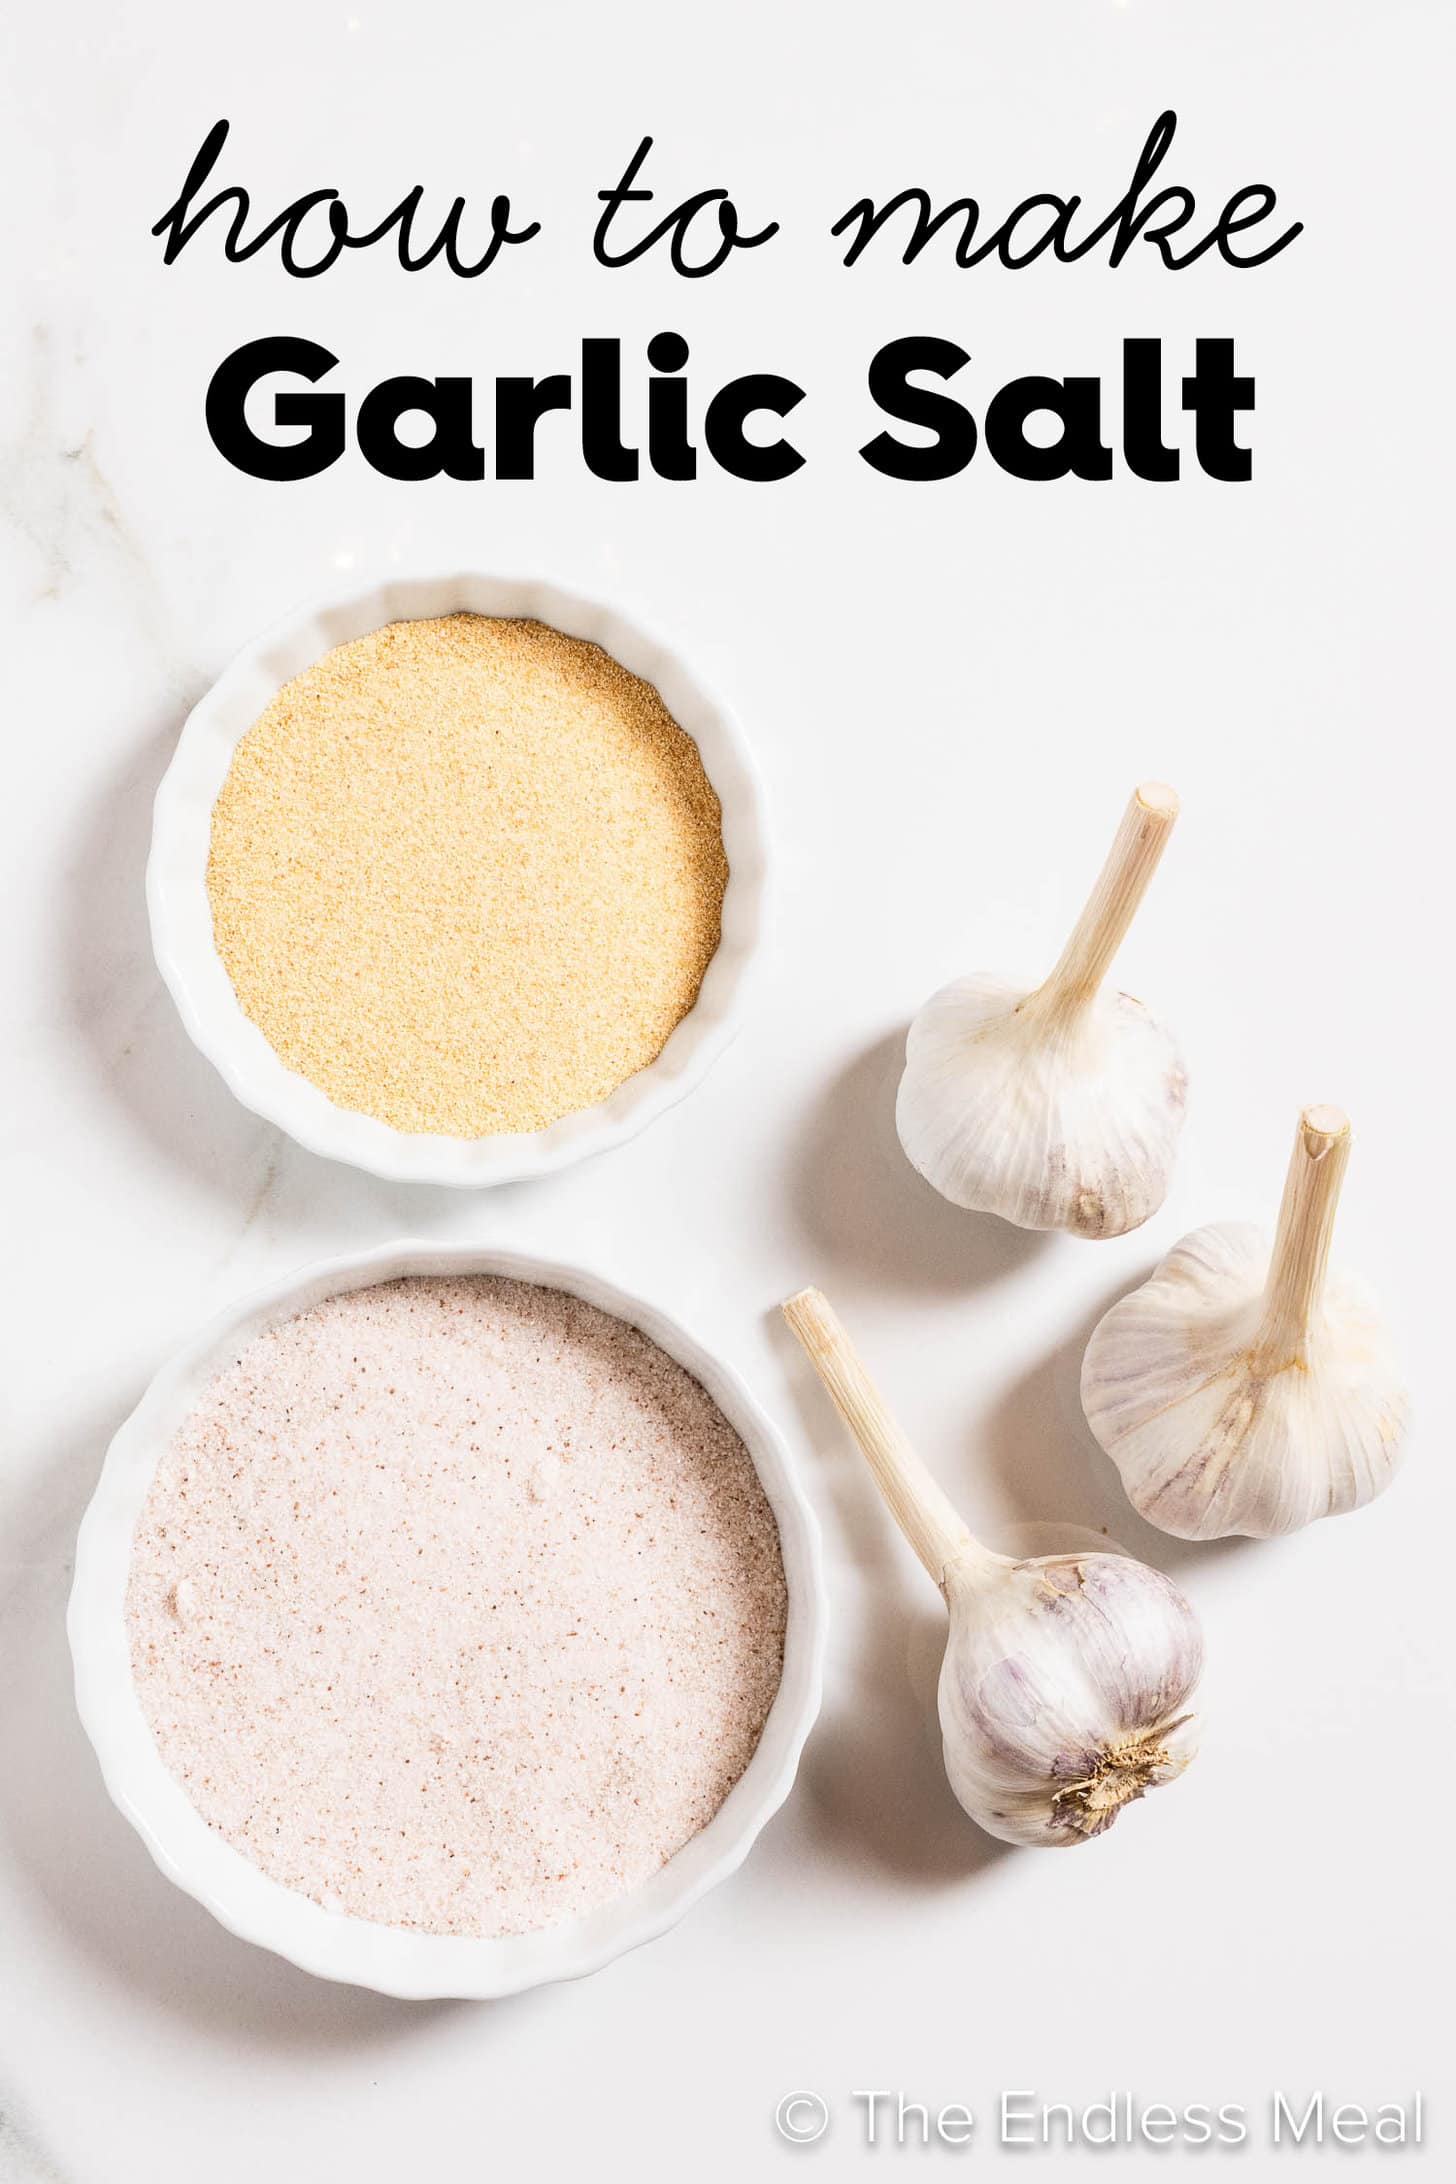 A picture showing garlic salt ingredients